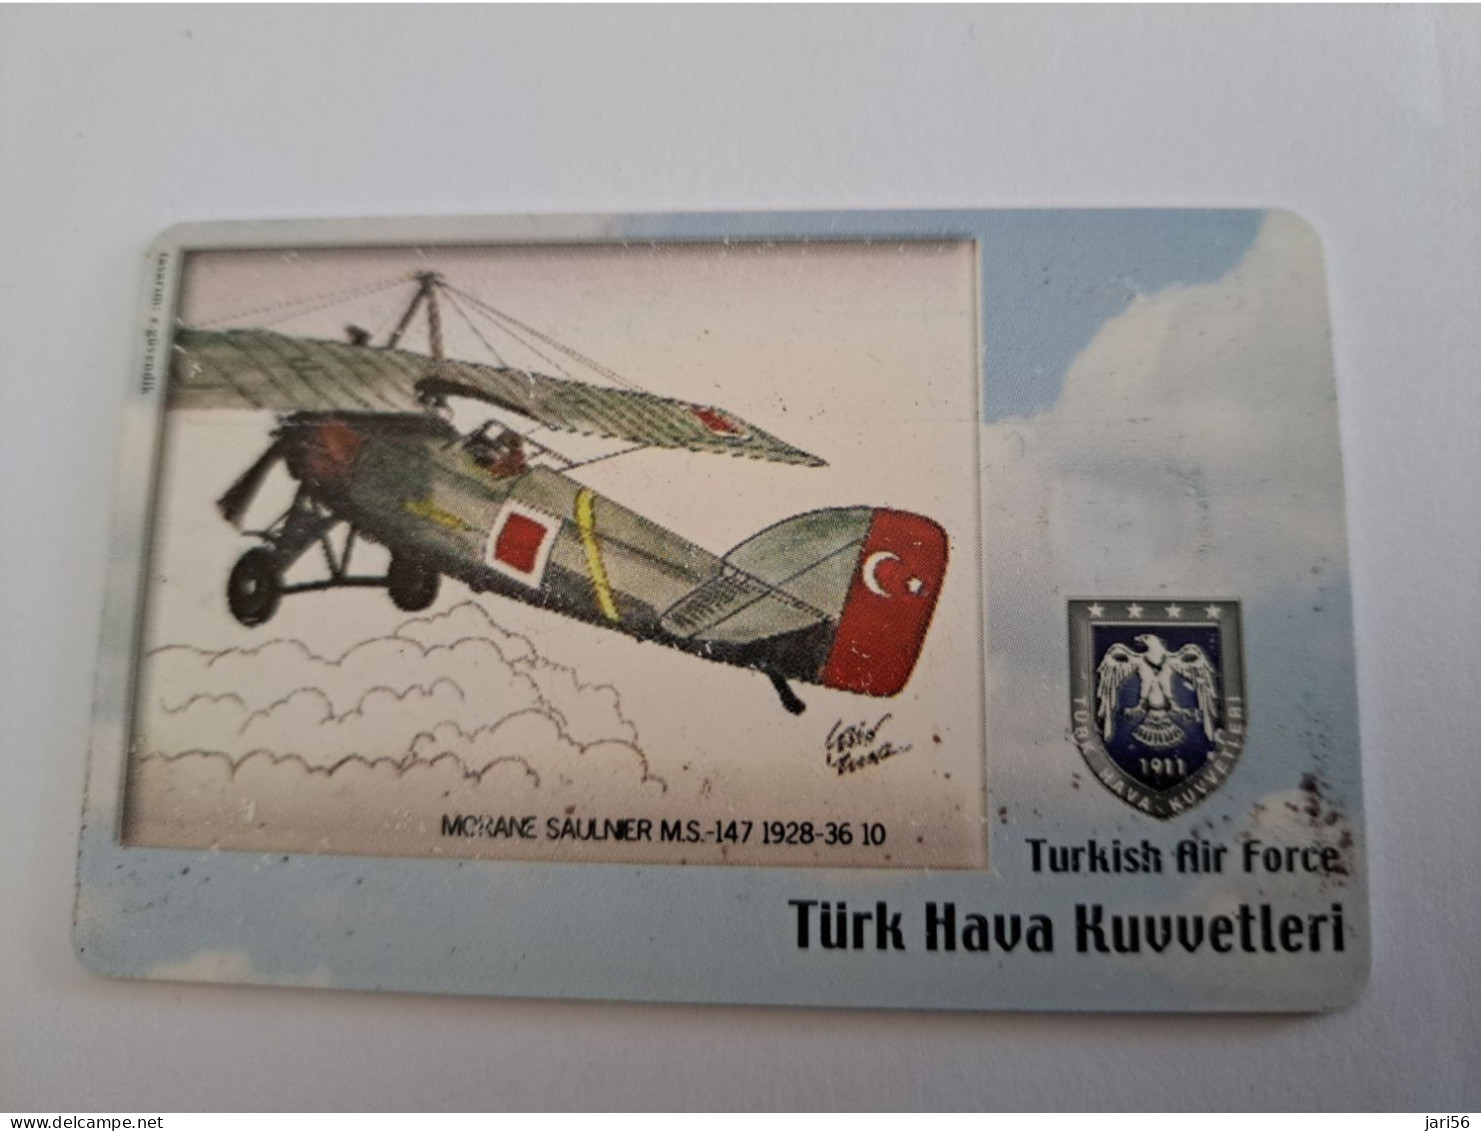 TURKIJE / 50 UNITS/ CHIPCARD/ TURKISH AIR FORCE  / DIFFERENT PLANES /        Fine Used Card  **15390** - Turkey